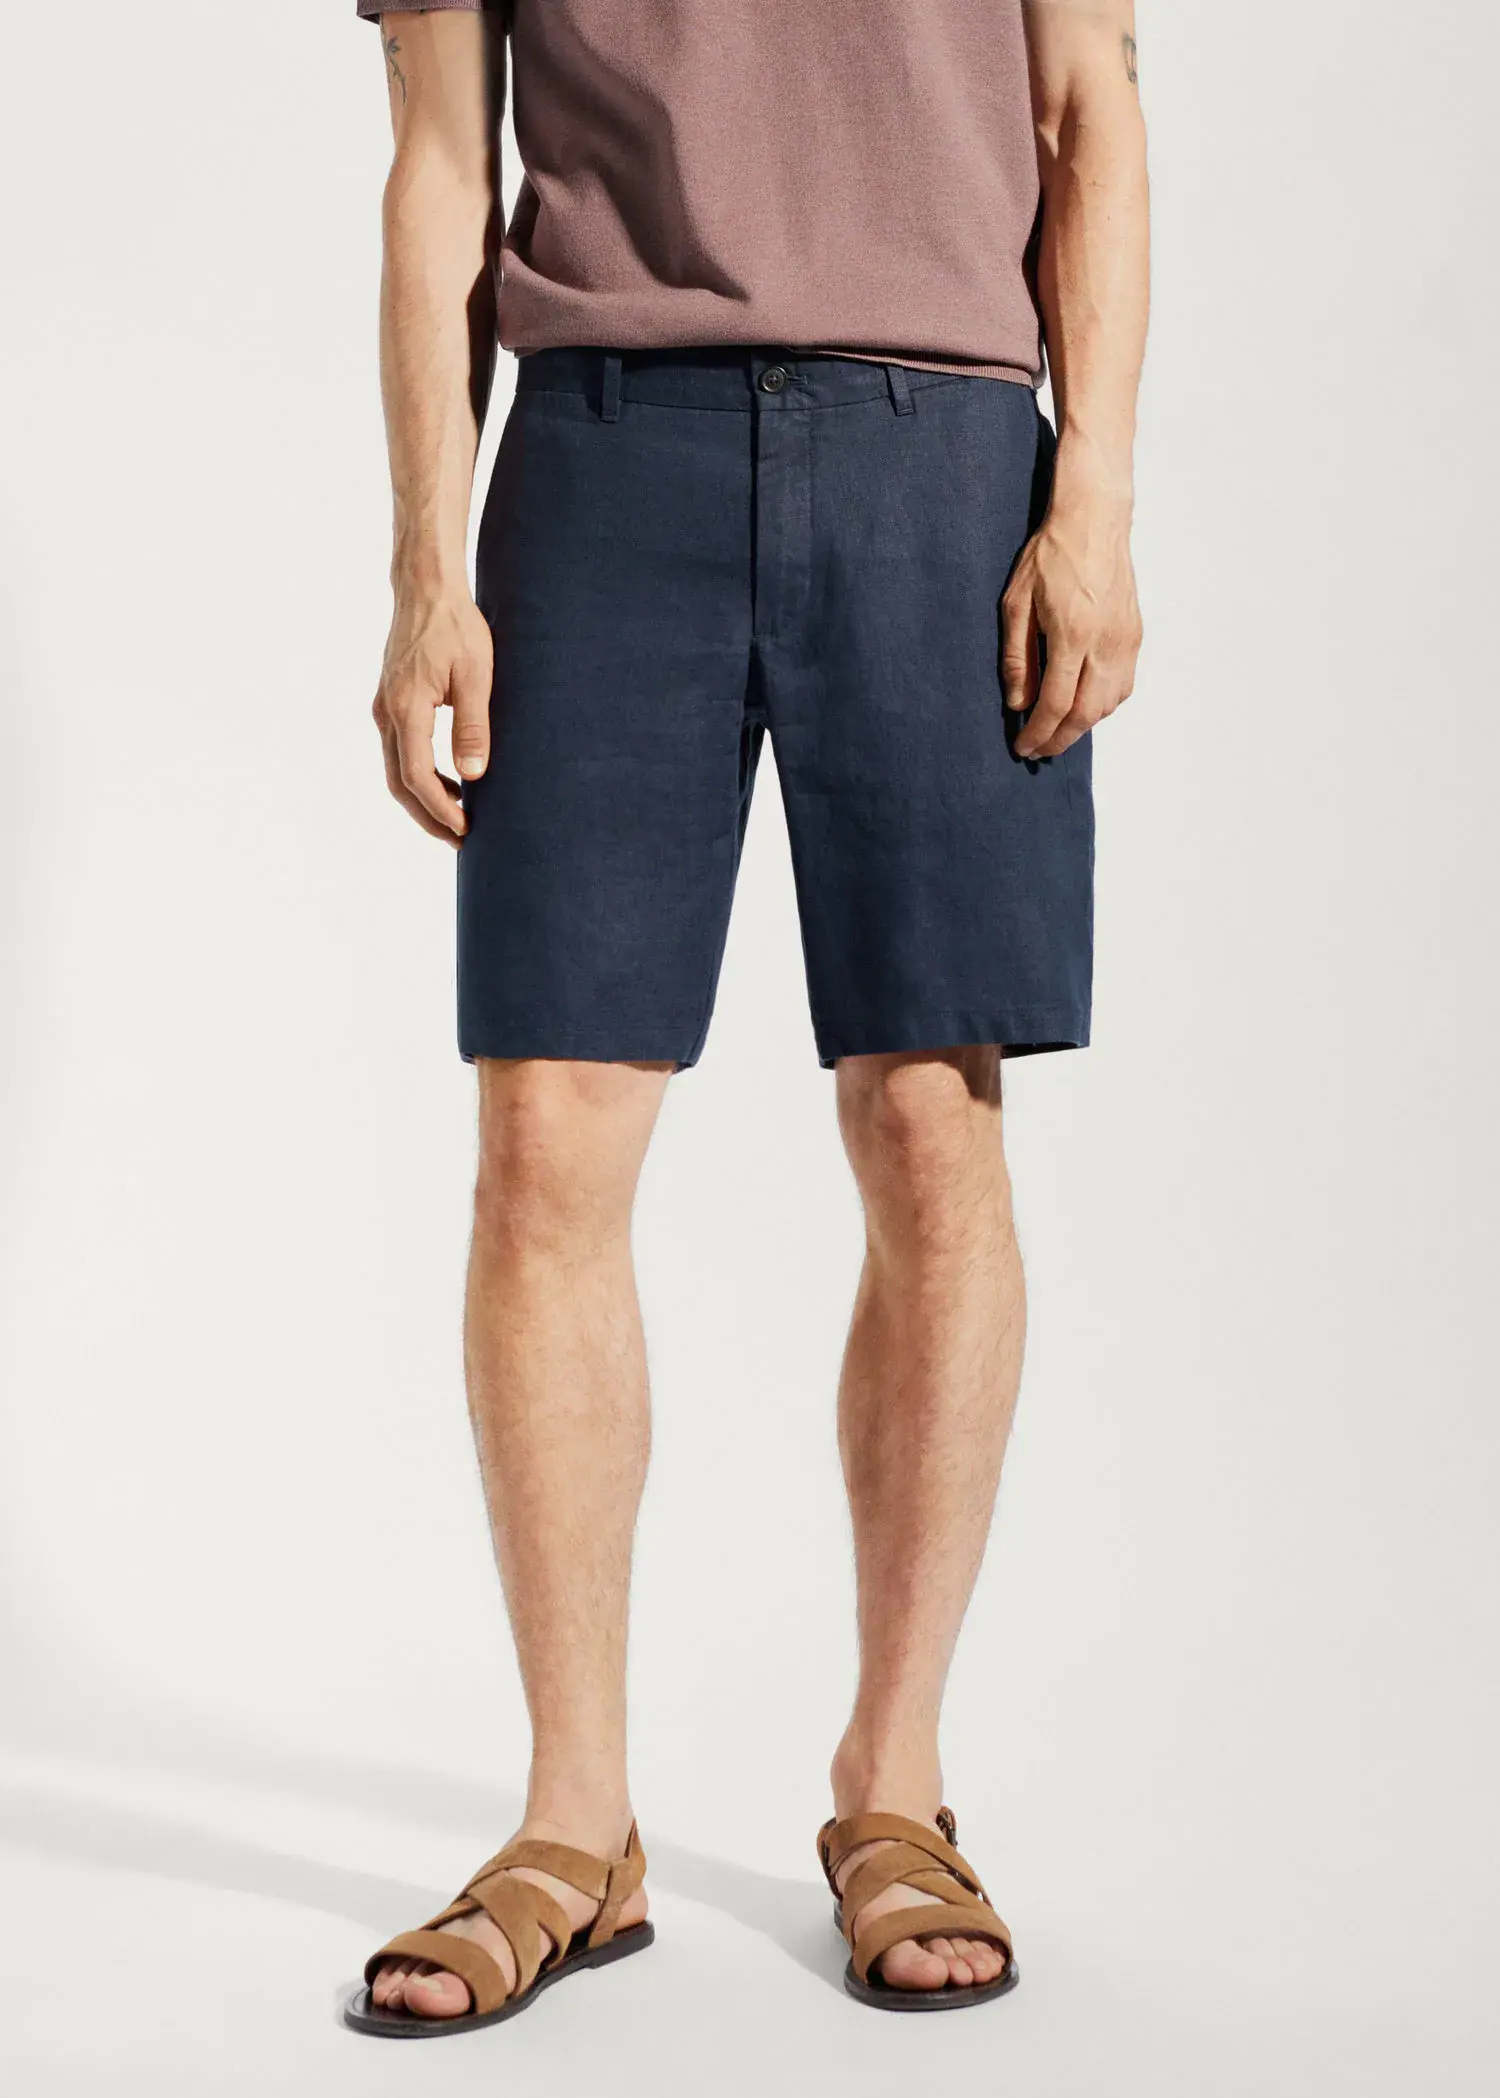 Mango 100% linen shorts. a man wearing a pair of blue shorts. 